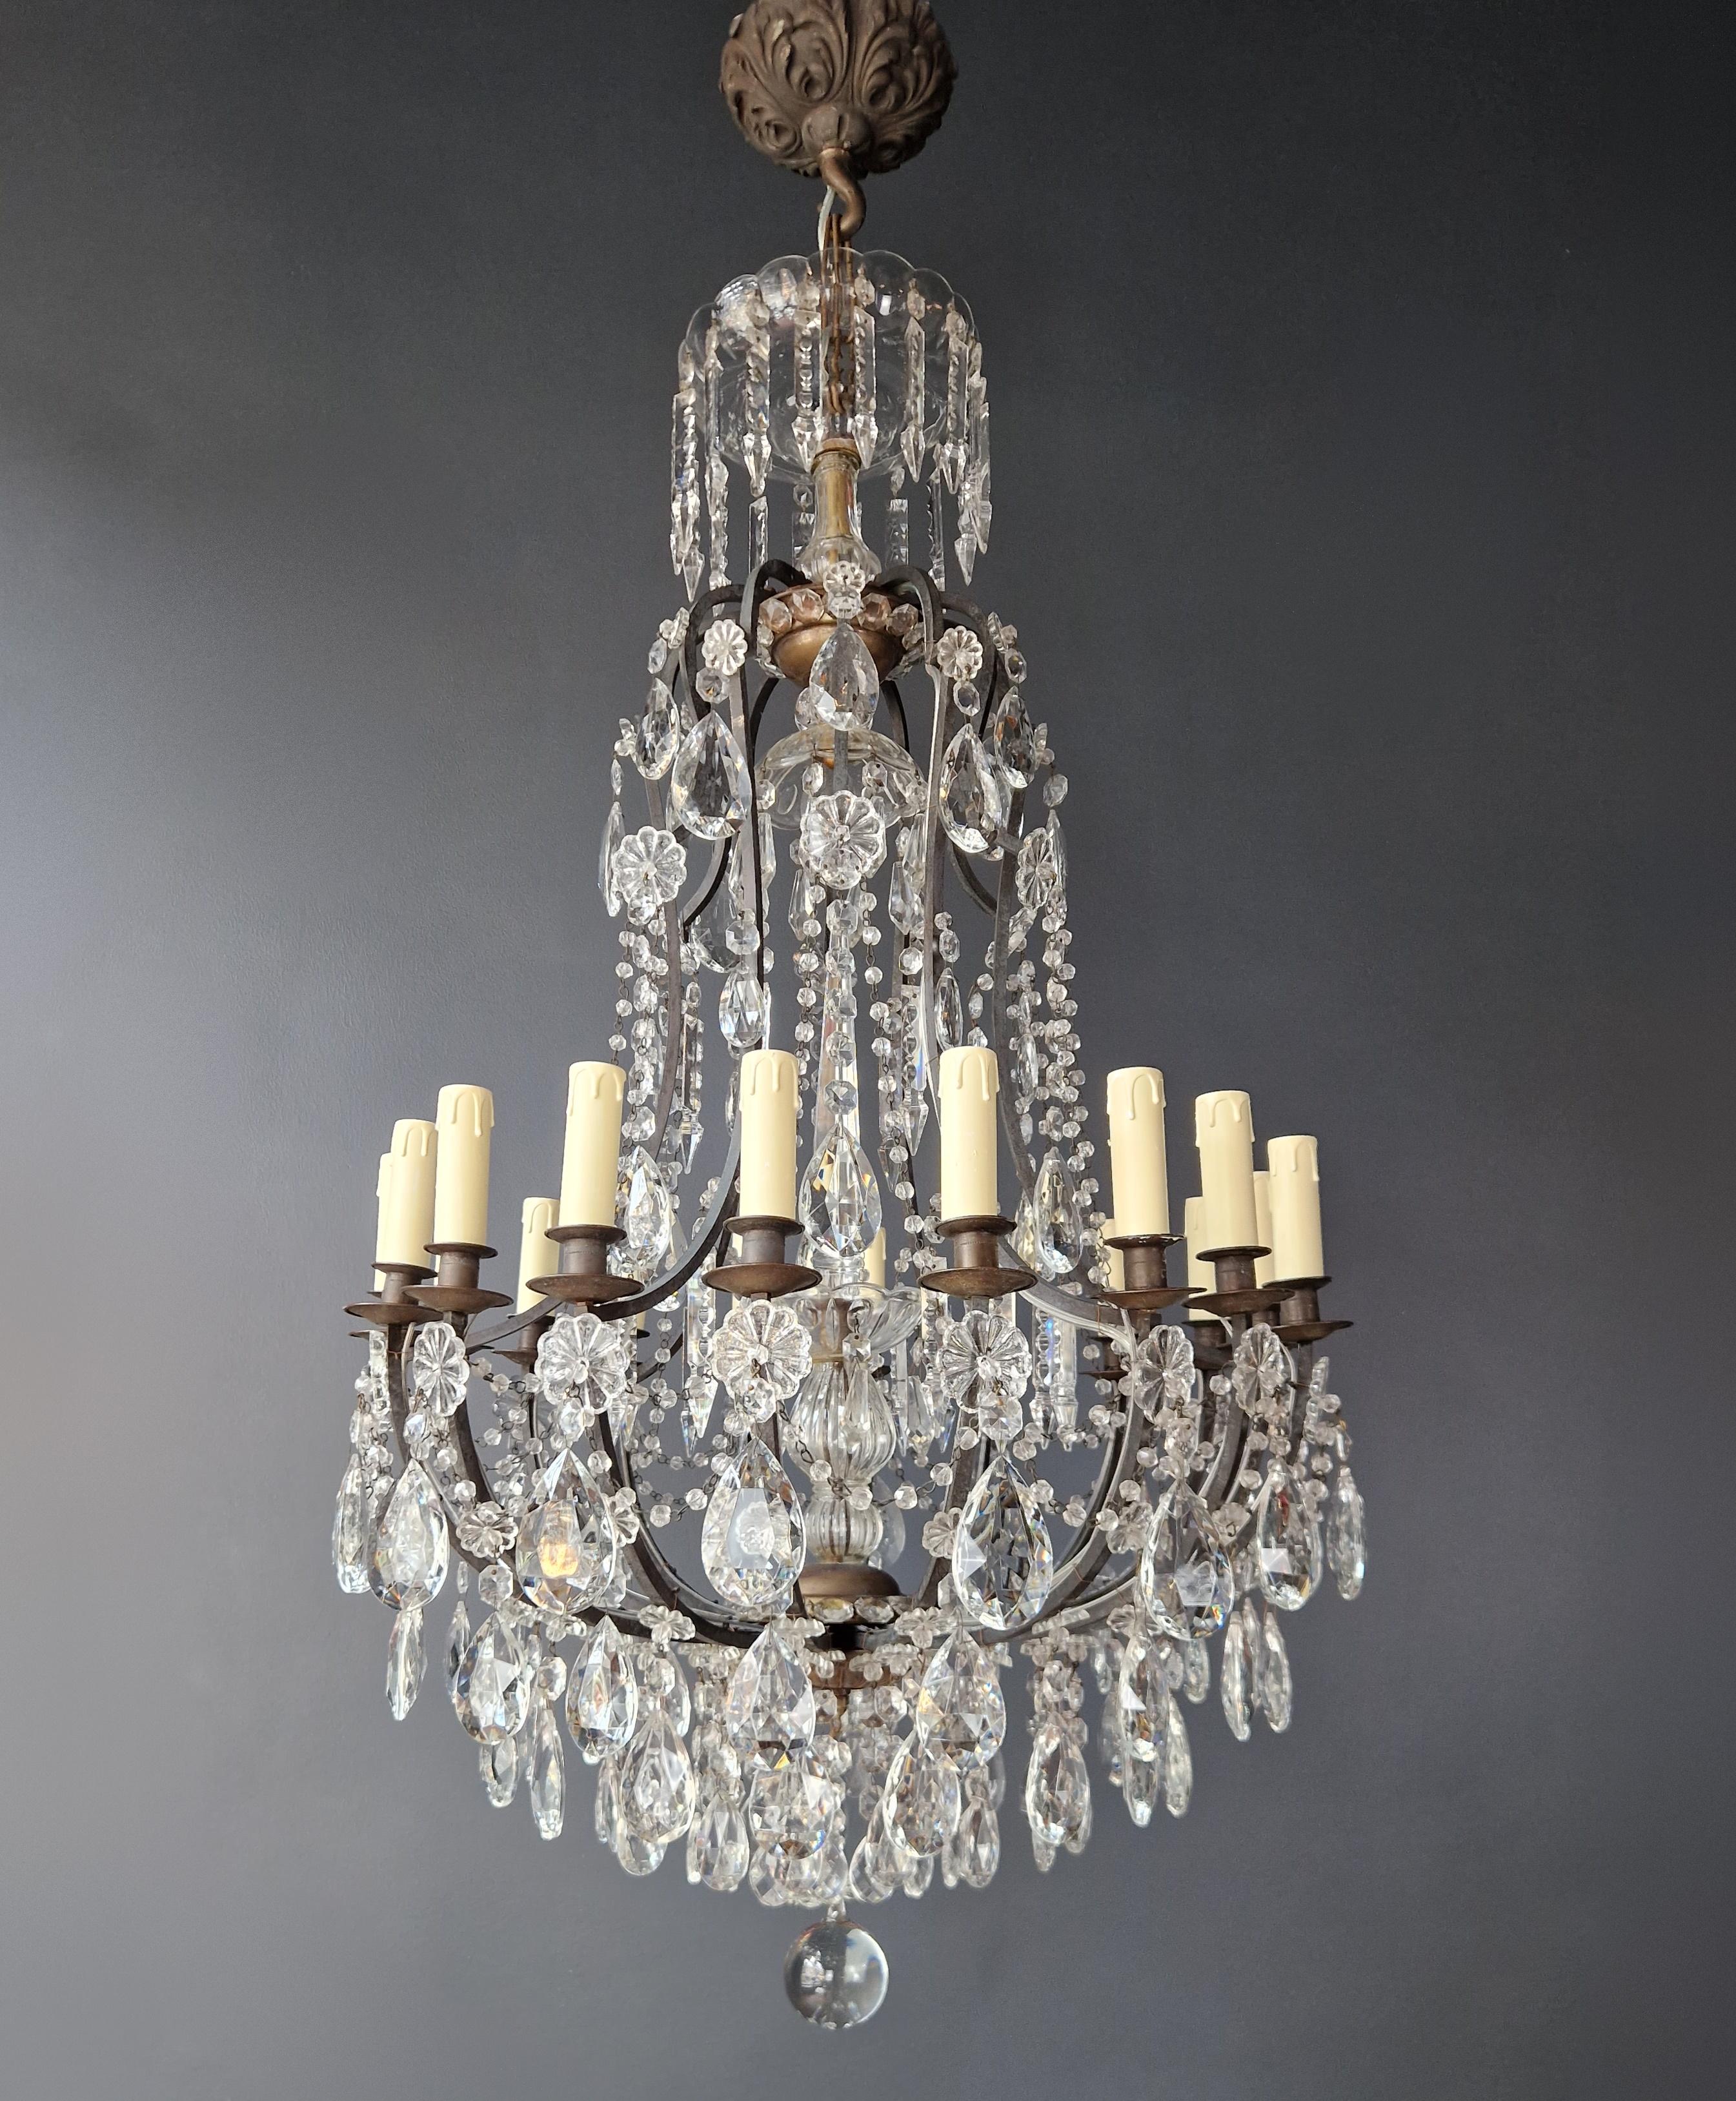 Gothic Antique French Crystal Chandelier Ceiling Lamp Lustre Art Nouveau Lamp For Sale